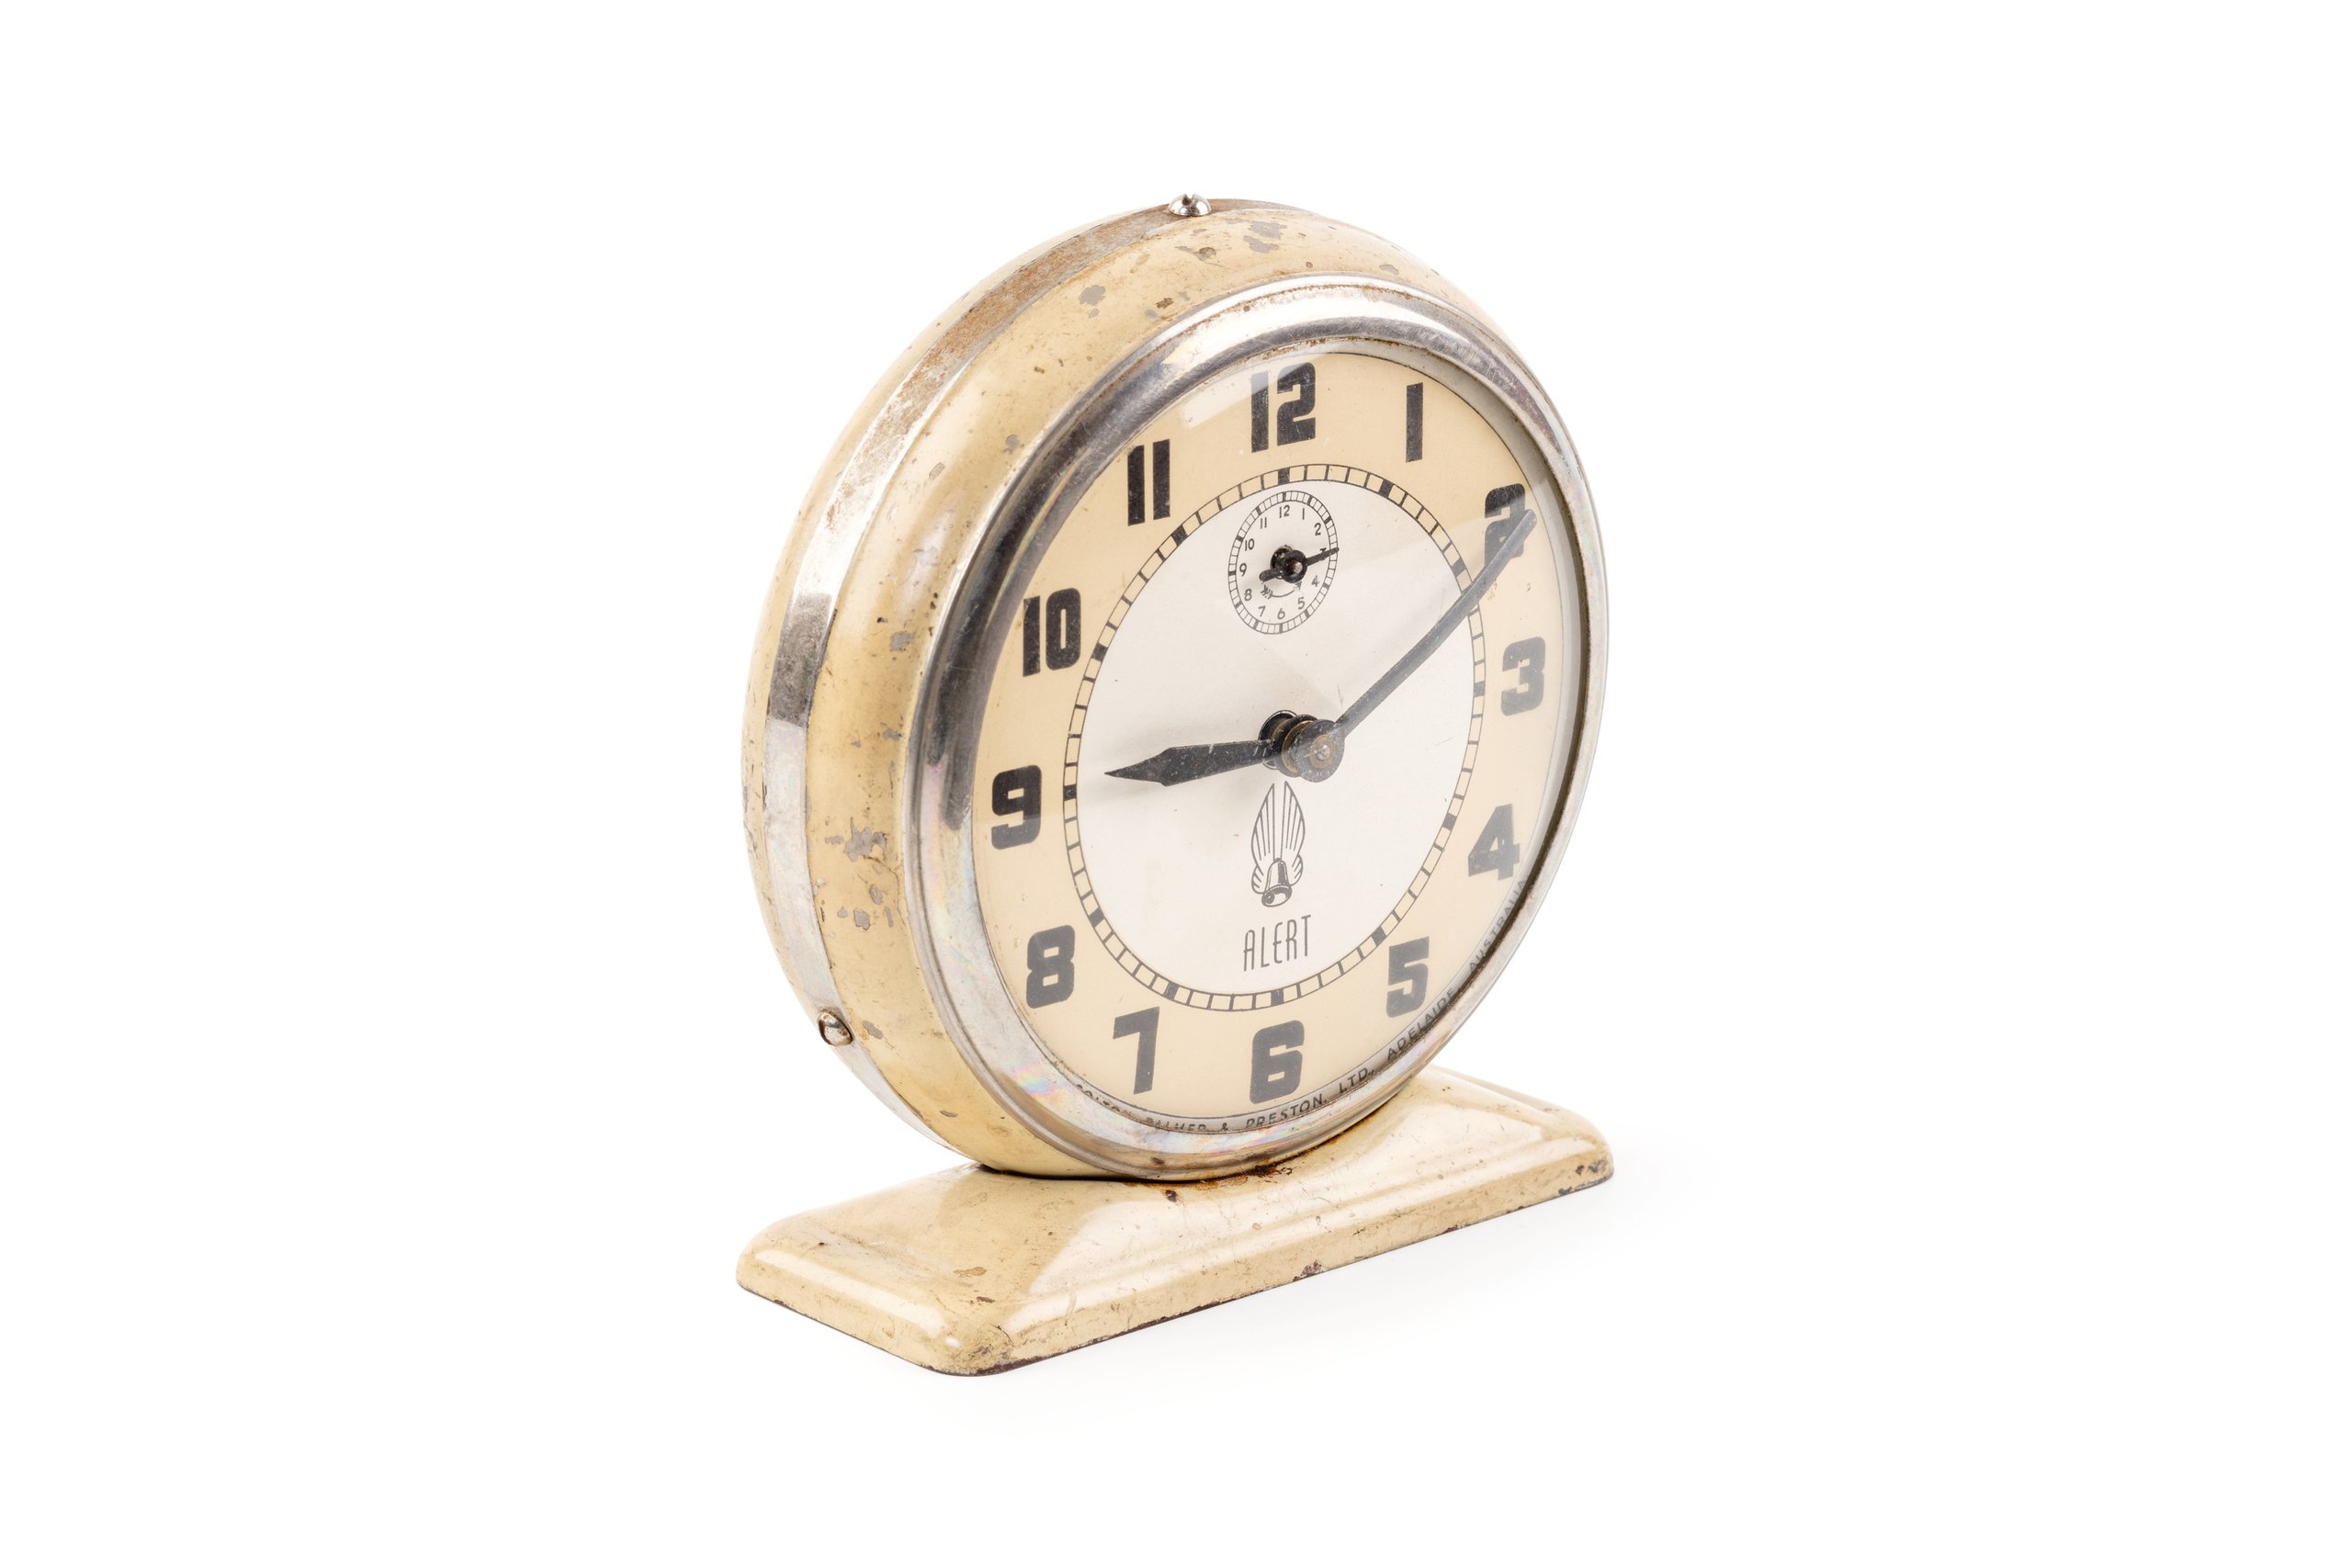 'Alert' alarm clock by Colton, Palmer and Preston Ltd